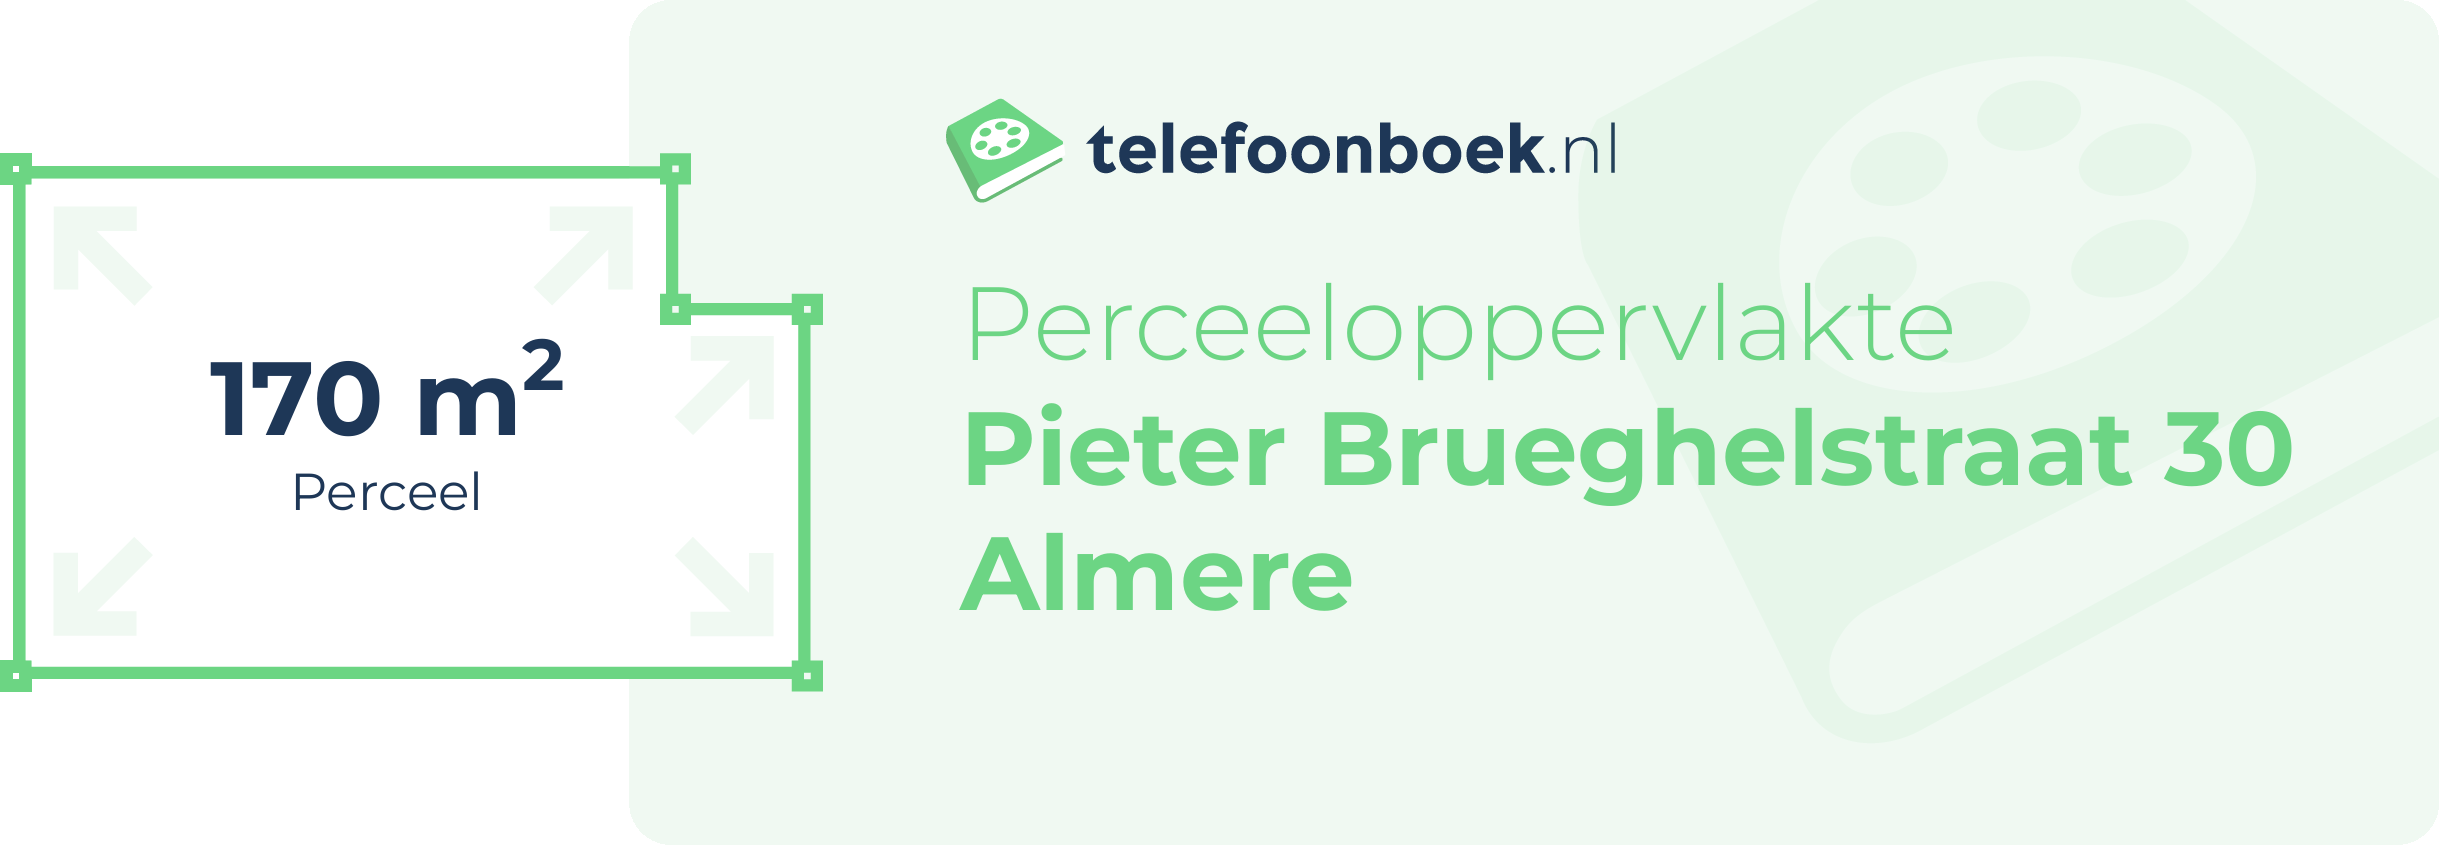 Perceeloppervlakte Pieter Brueghelstraat 30 Almere